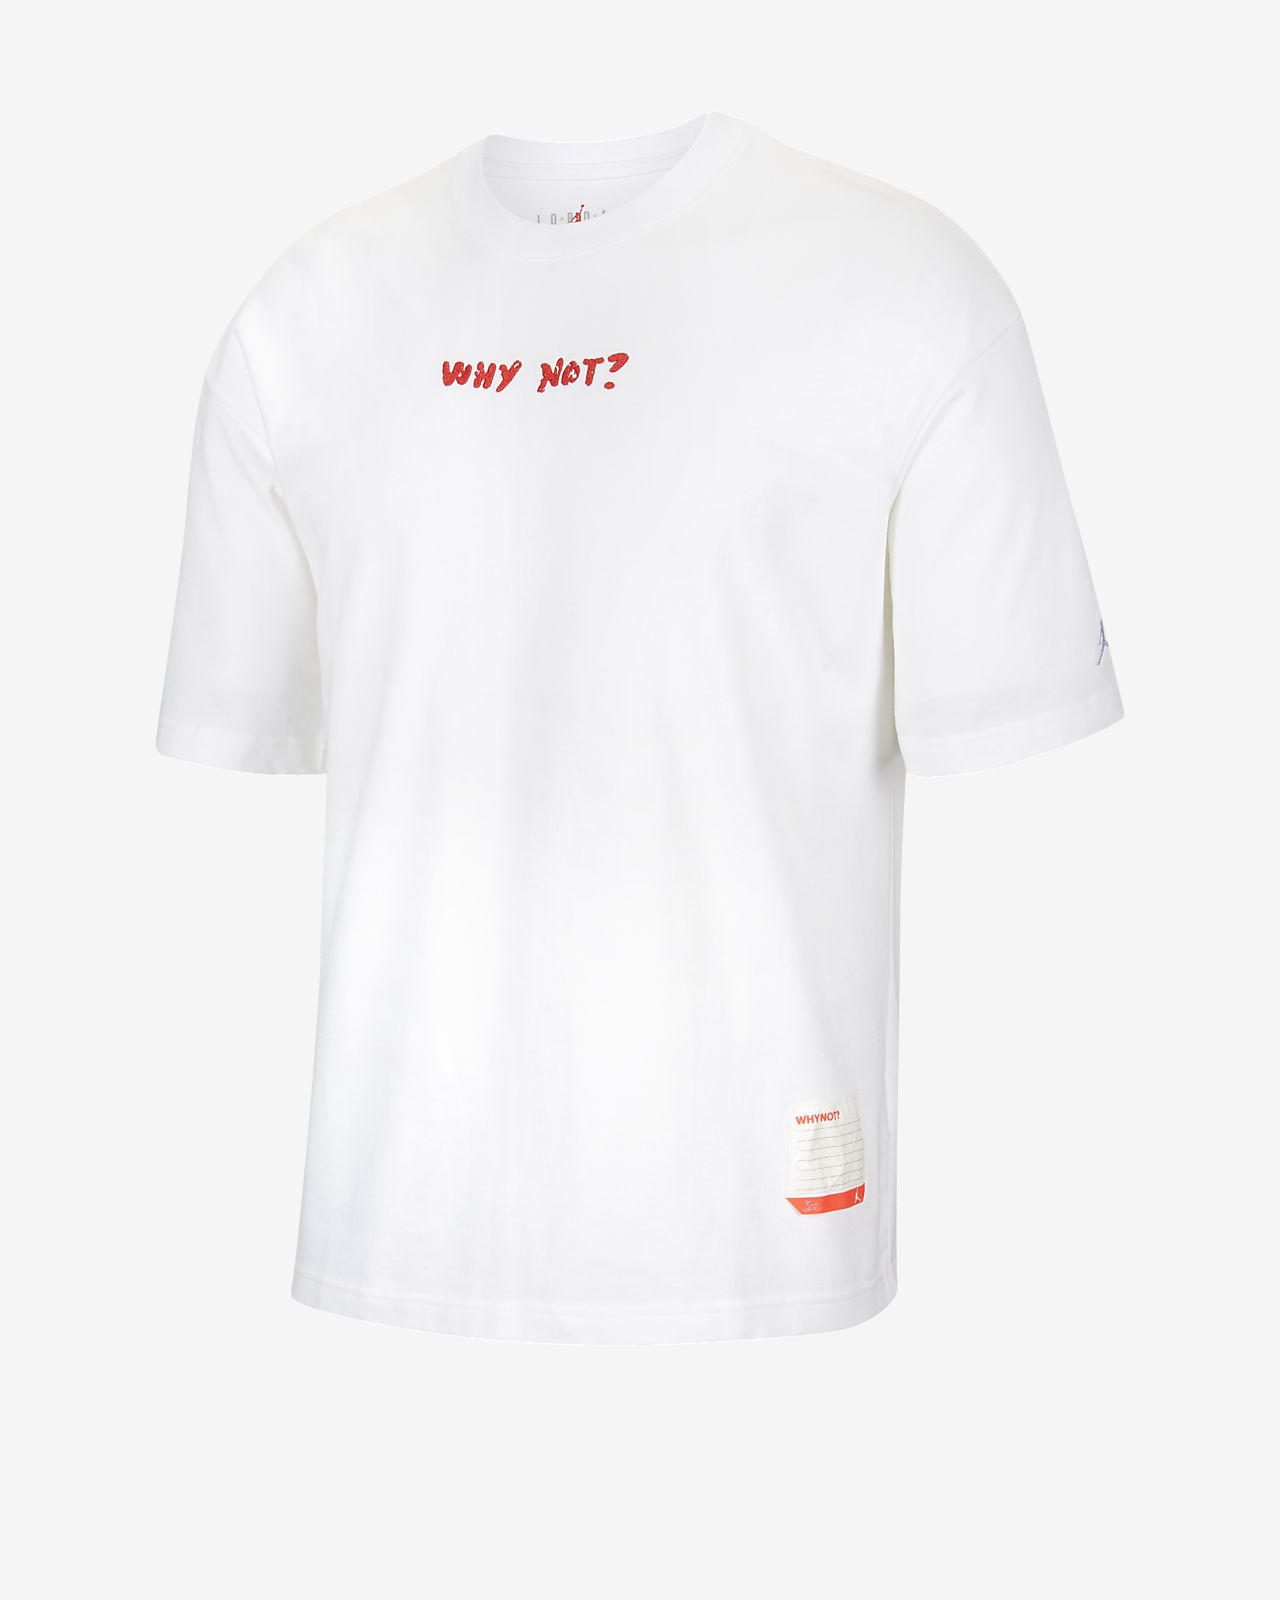 Nikeid T Shirt Off 78 Www Gentlementours Hu - how to create shirts roblox 2019 coolmine community school